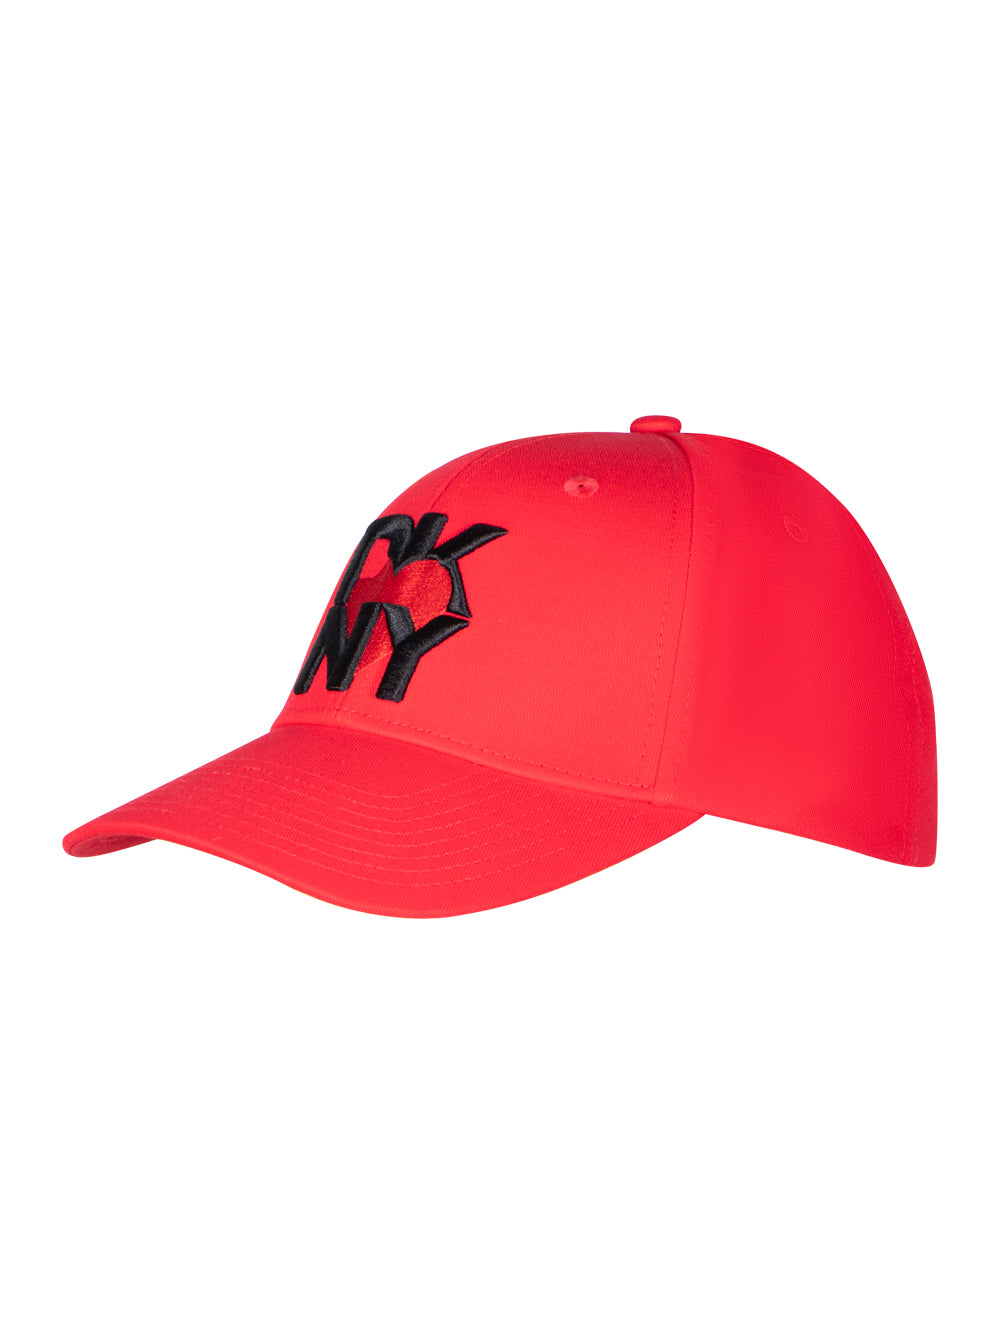 Women S Hat Red